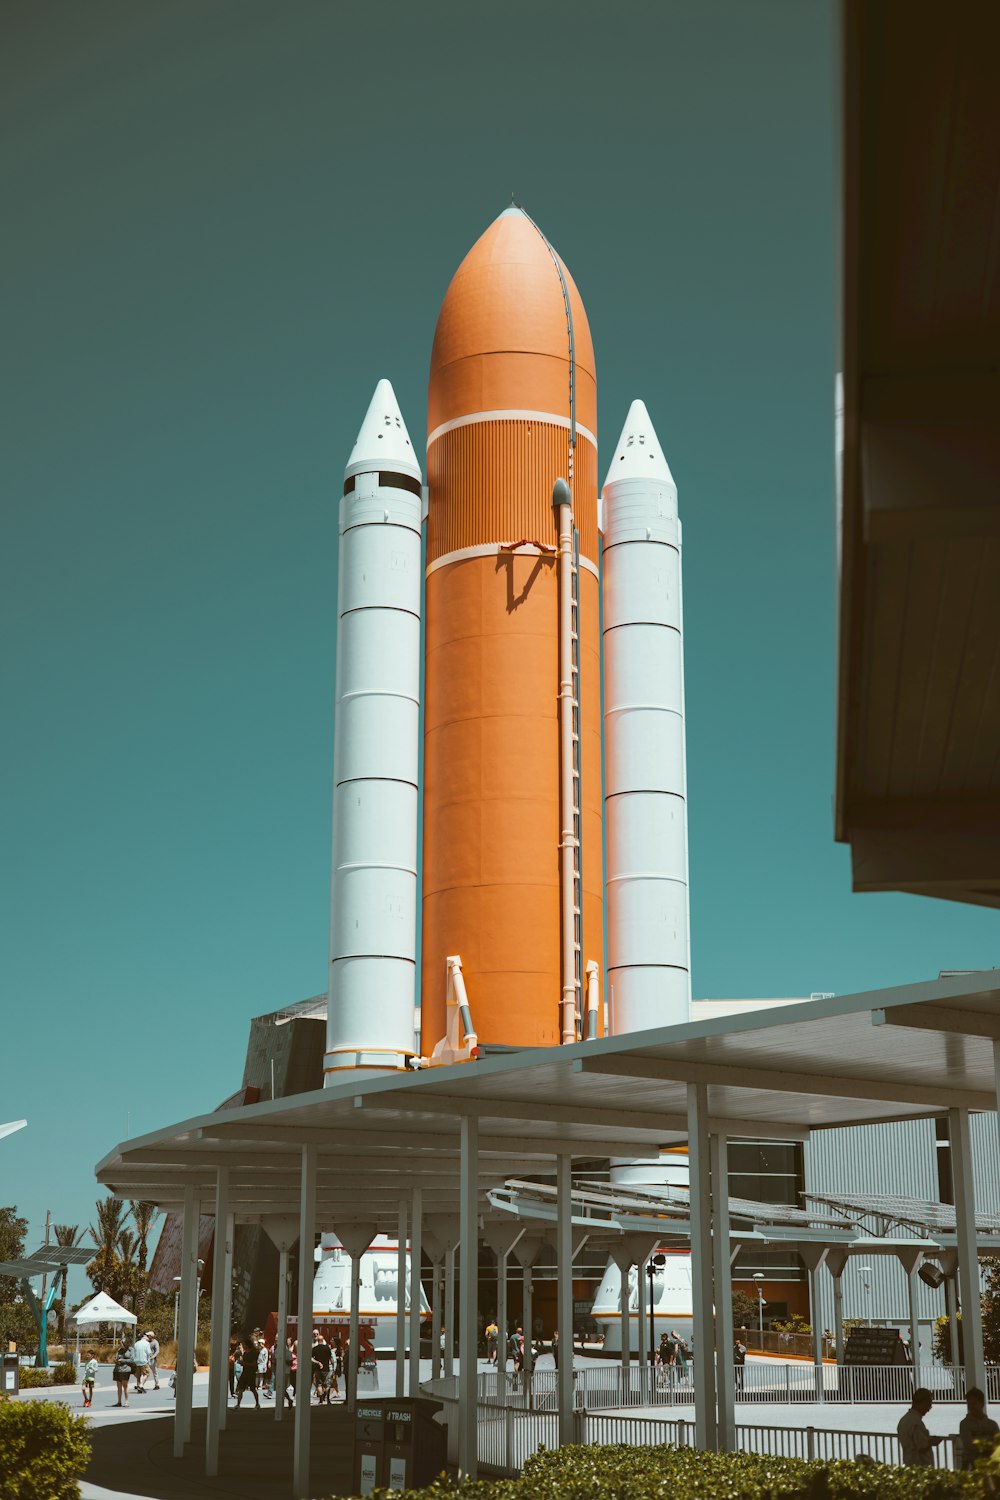 a large orange rocket sitting on top of a building